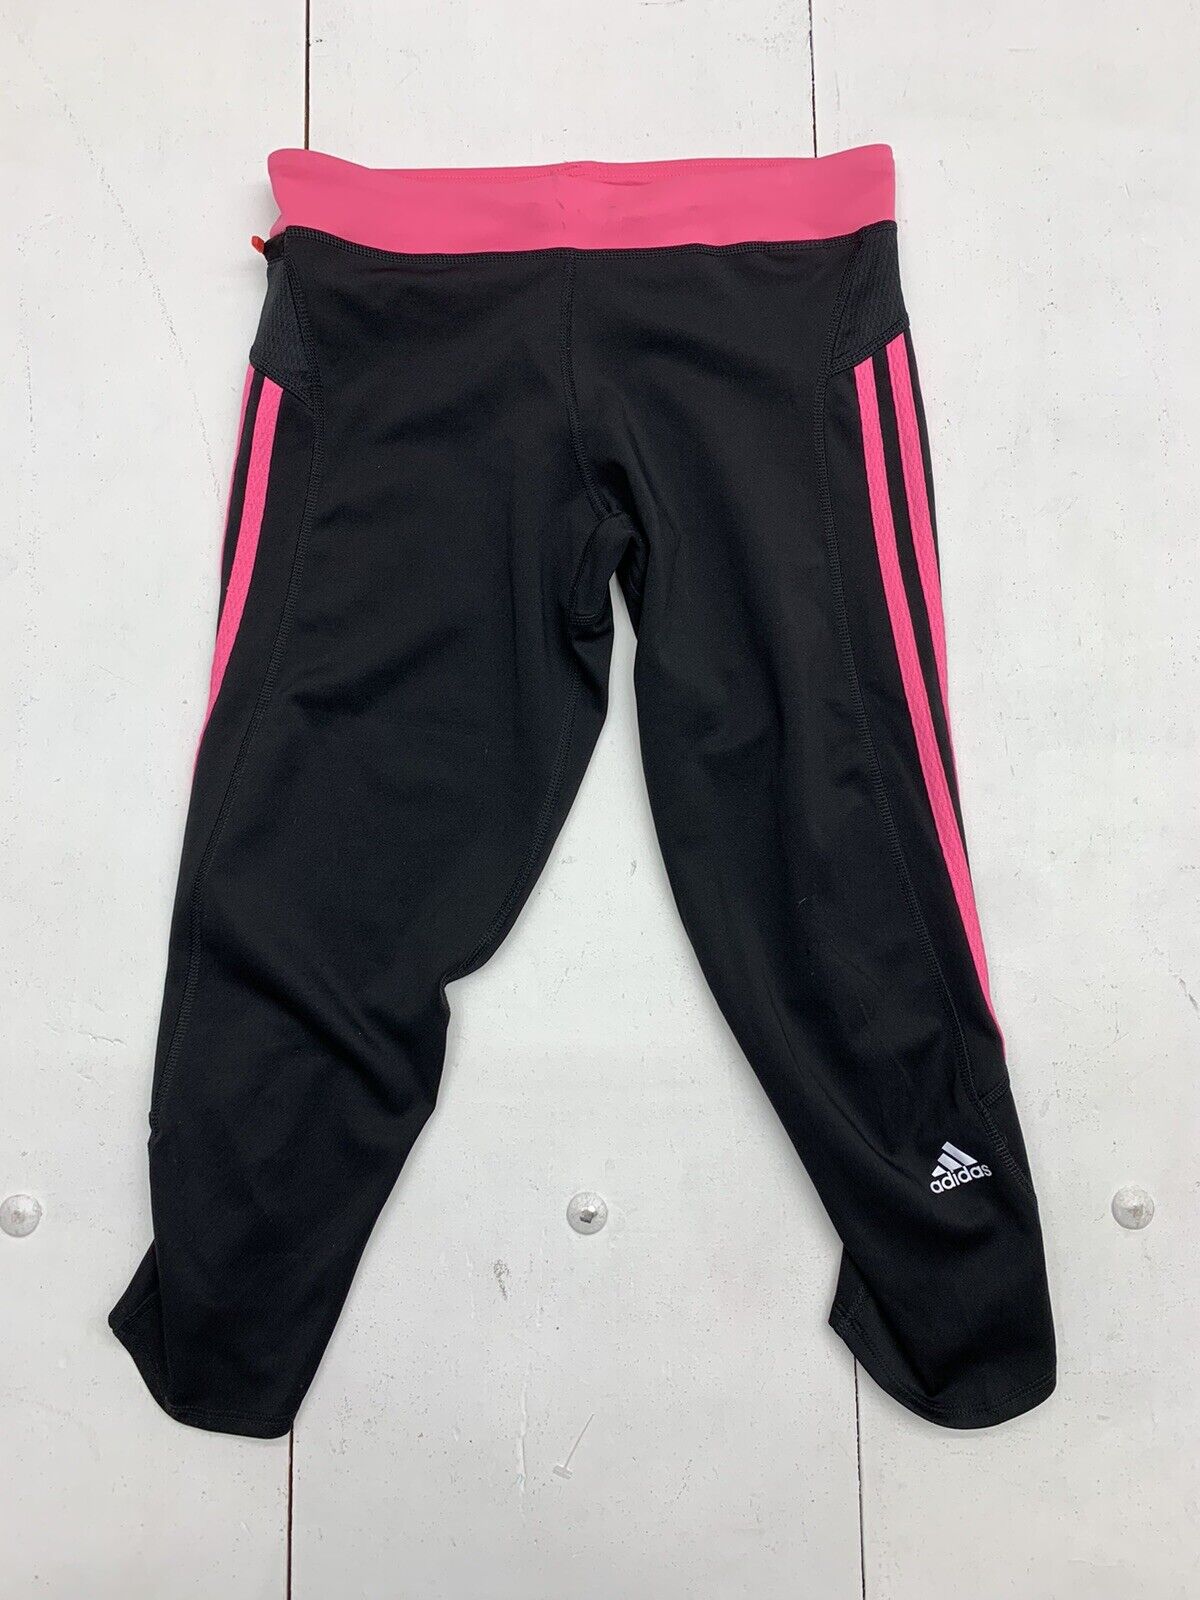 Adidas Womens Black Pink Capri Leggings Size Small